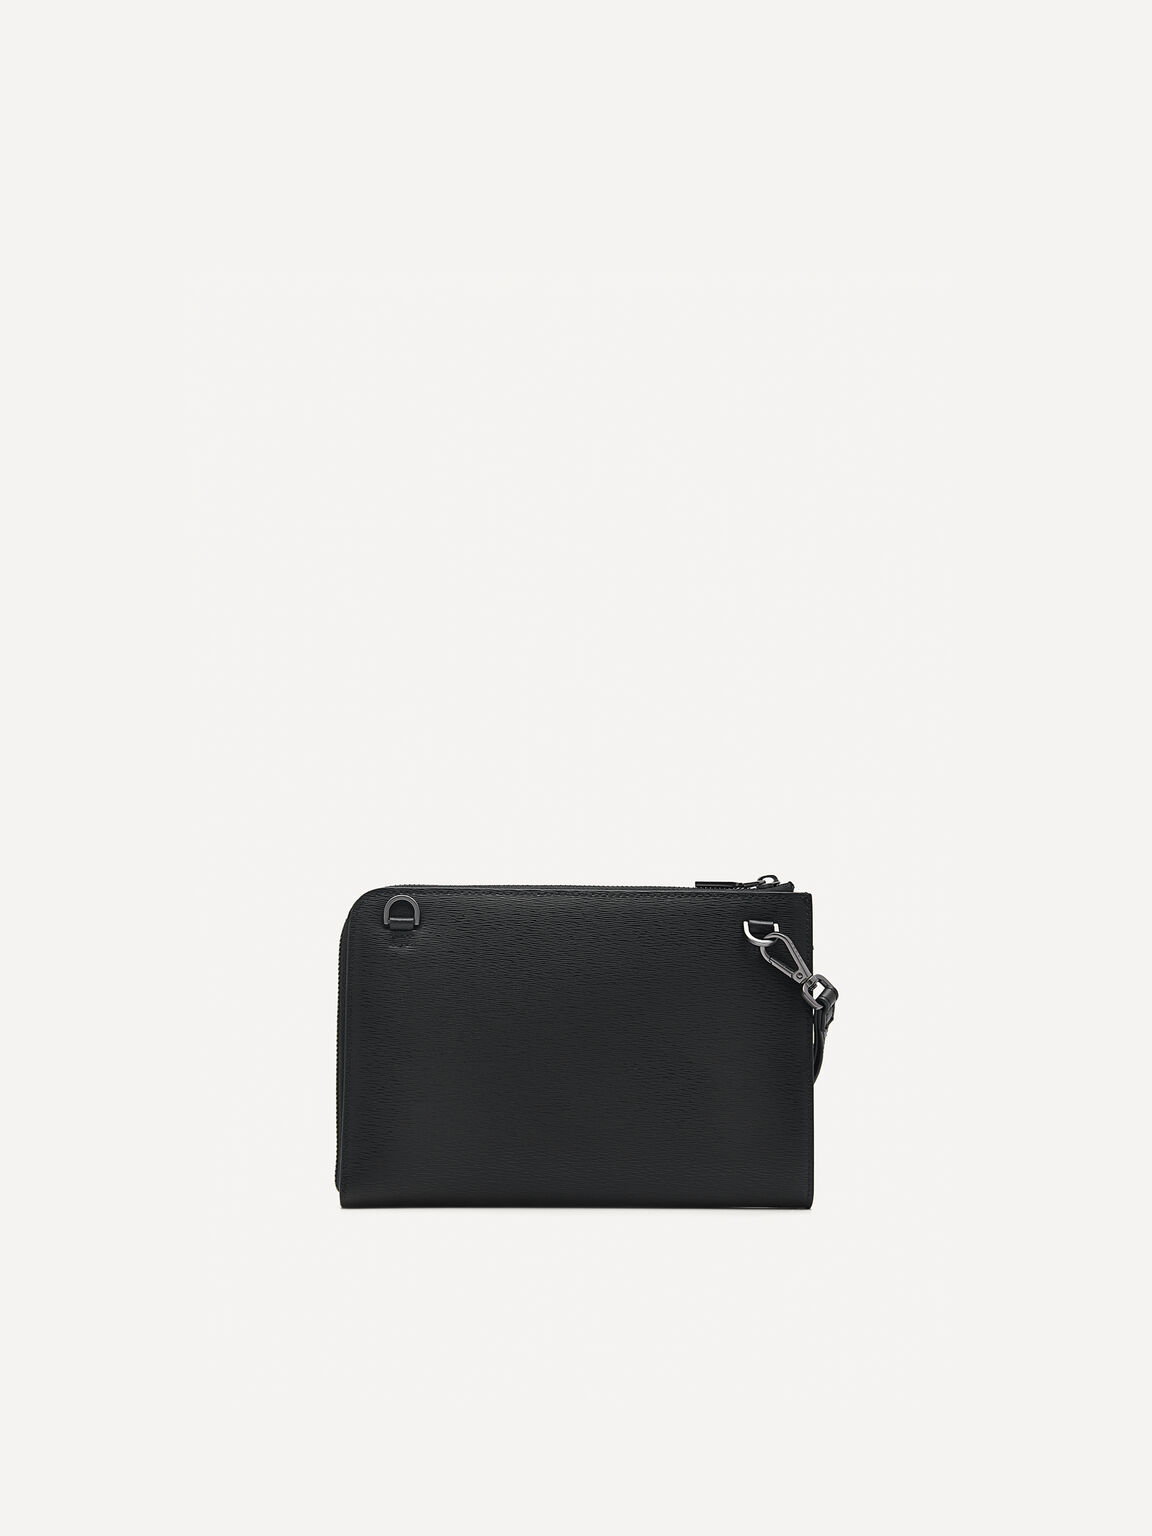 Small Leather Clutch Bag, Black, hi-res